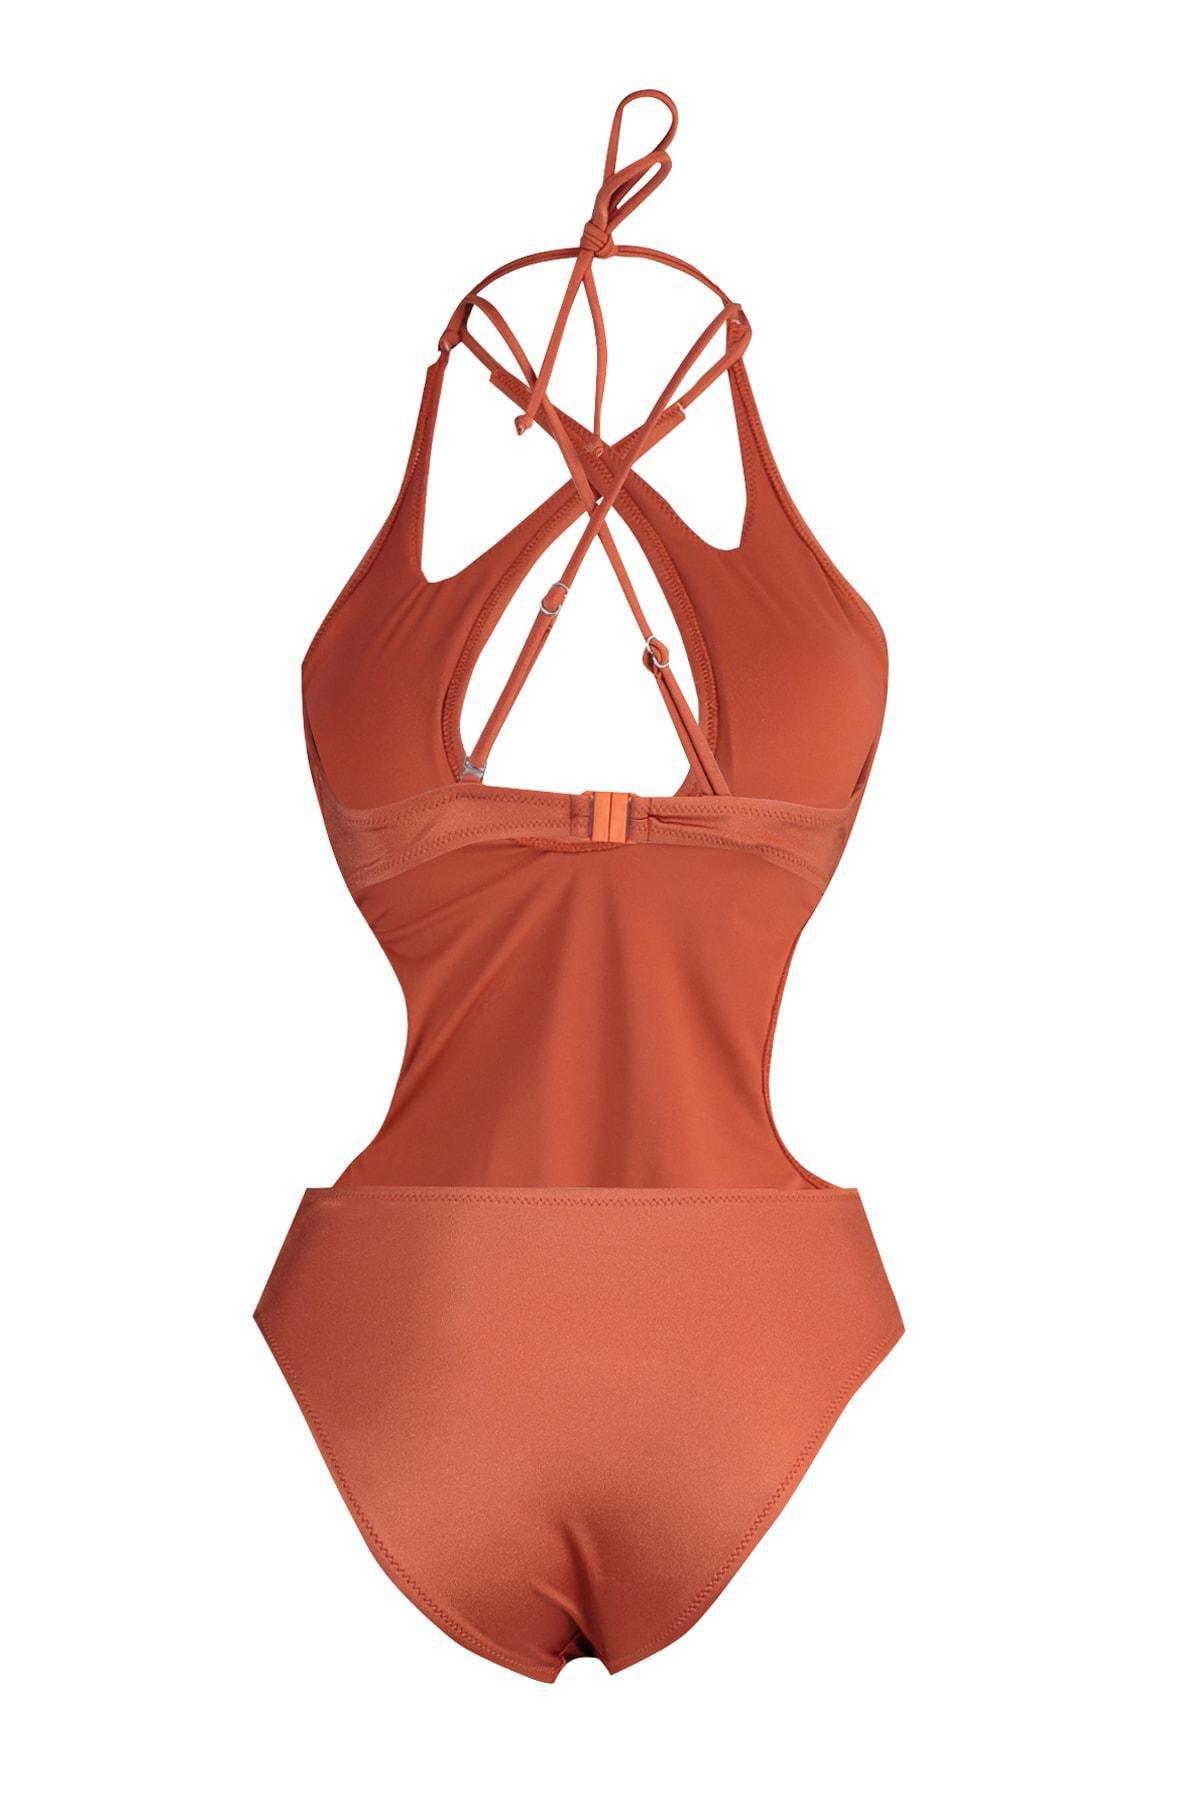 Trendyol - Brown Plain Swimsuit